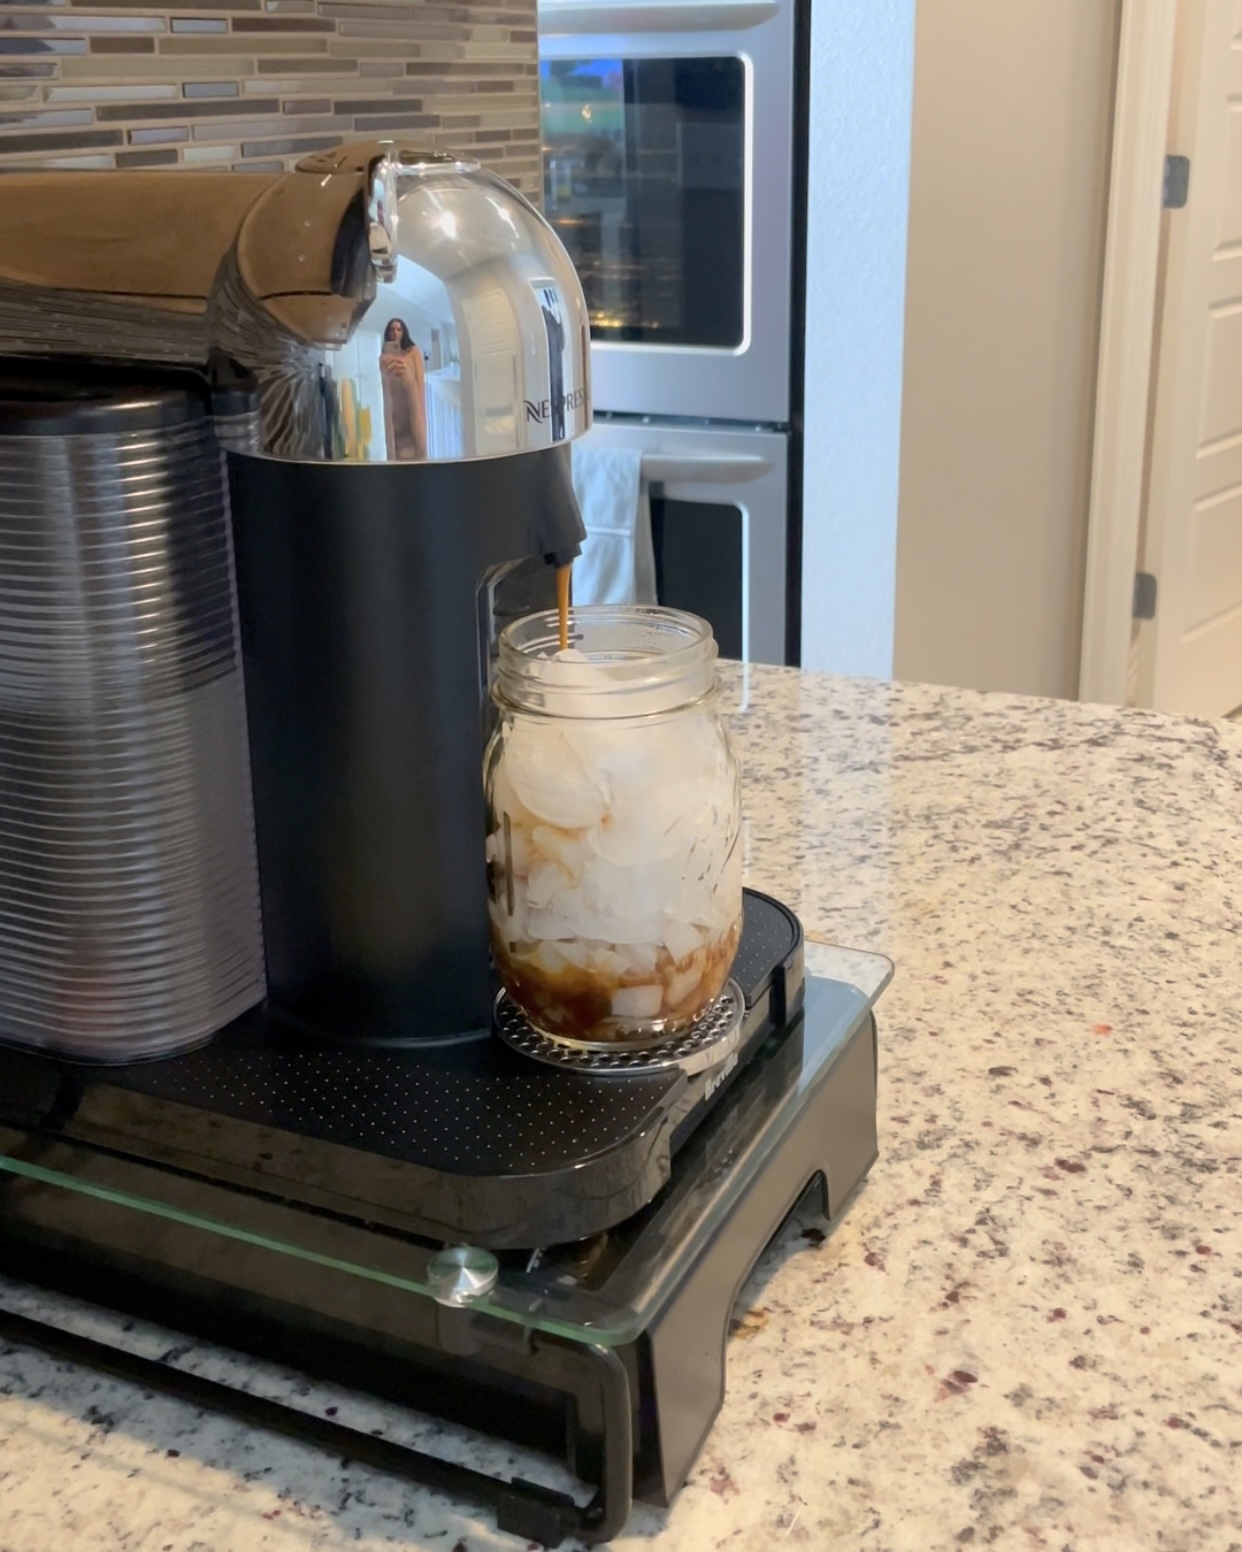 kuerig coffee machine making an espresso latte